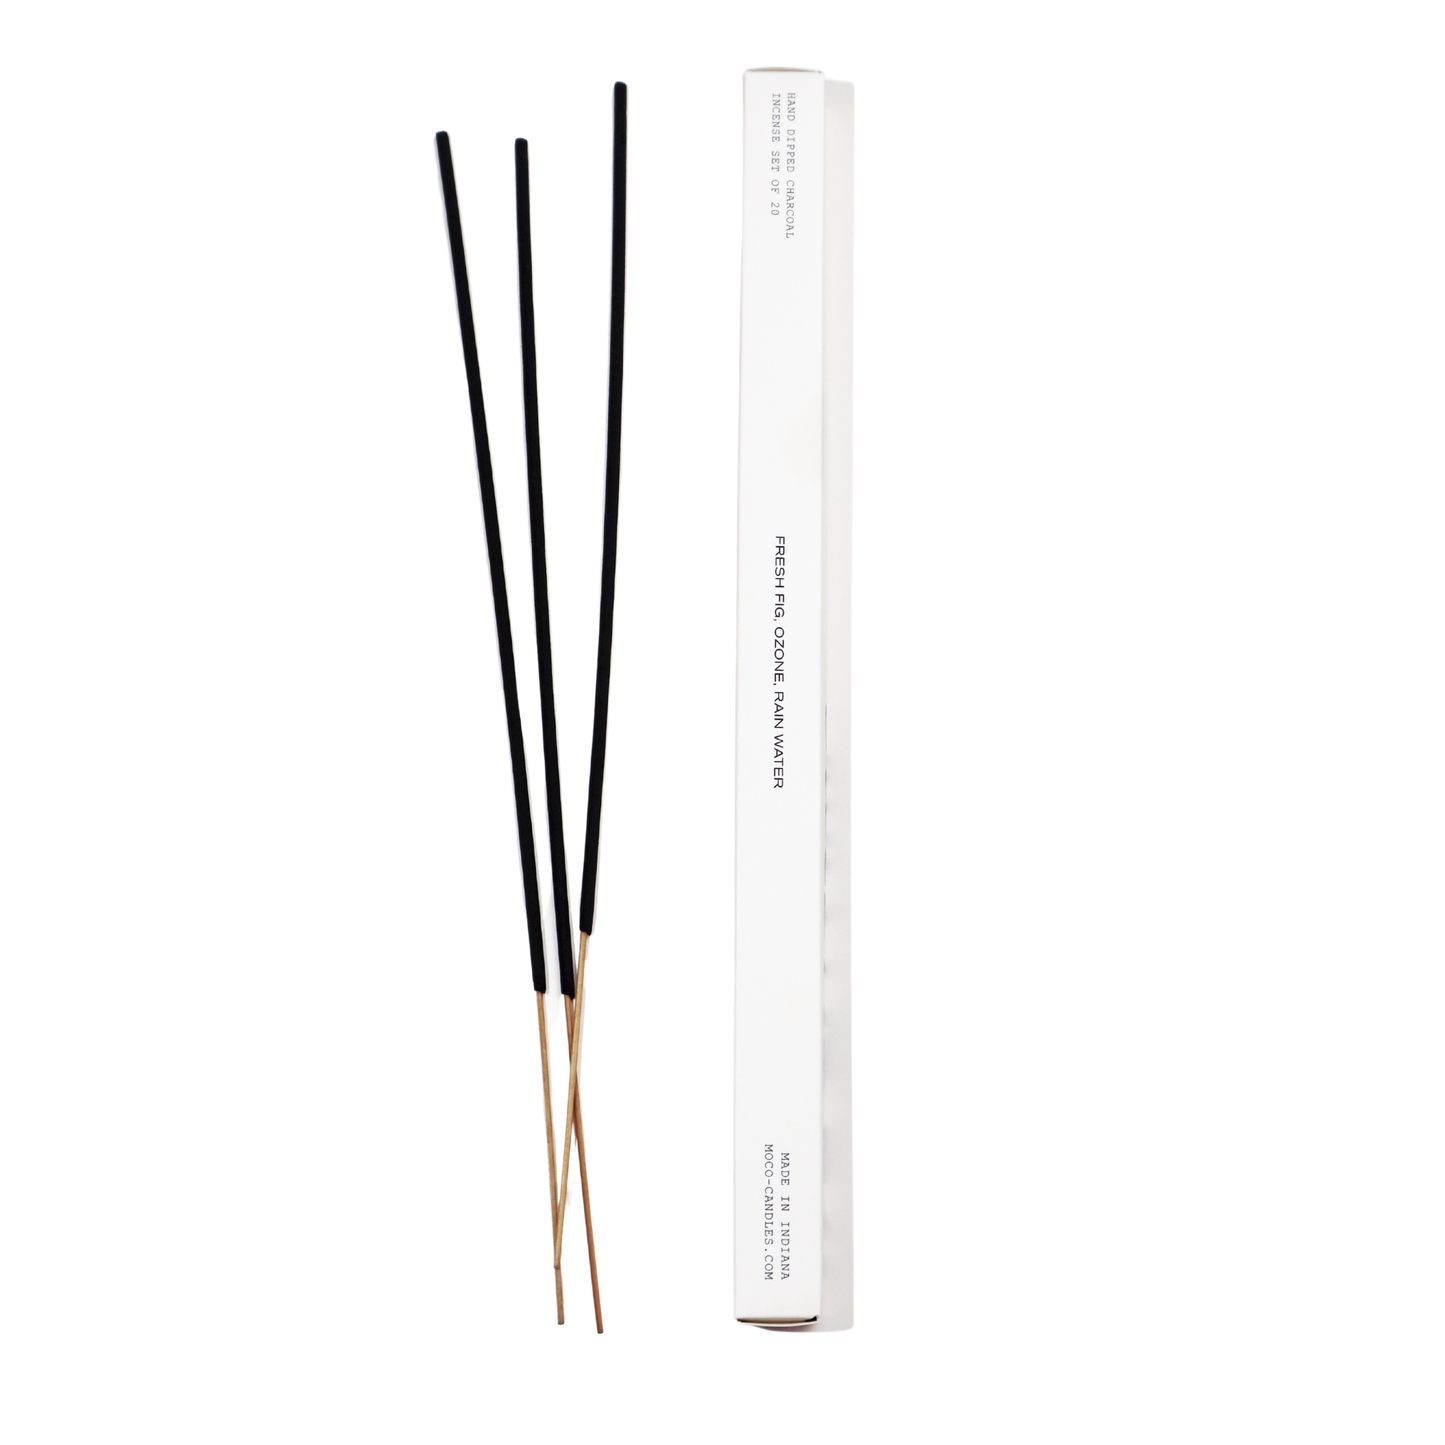 Sweetgrass - Incense Sticks